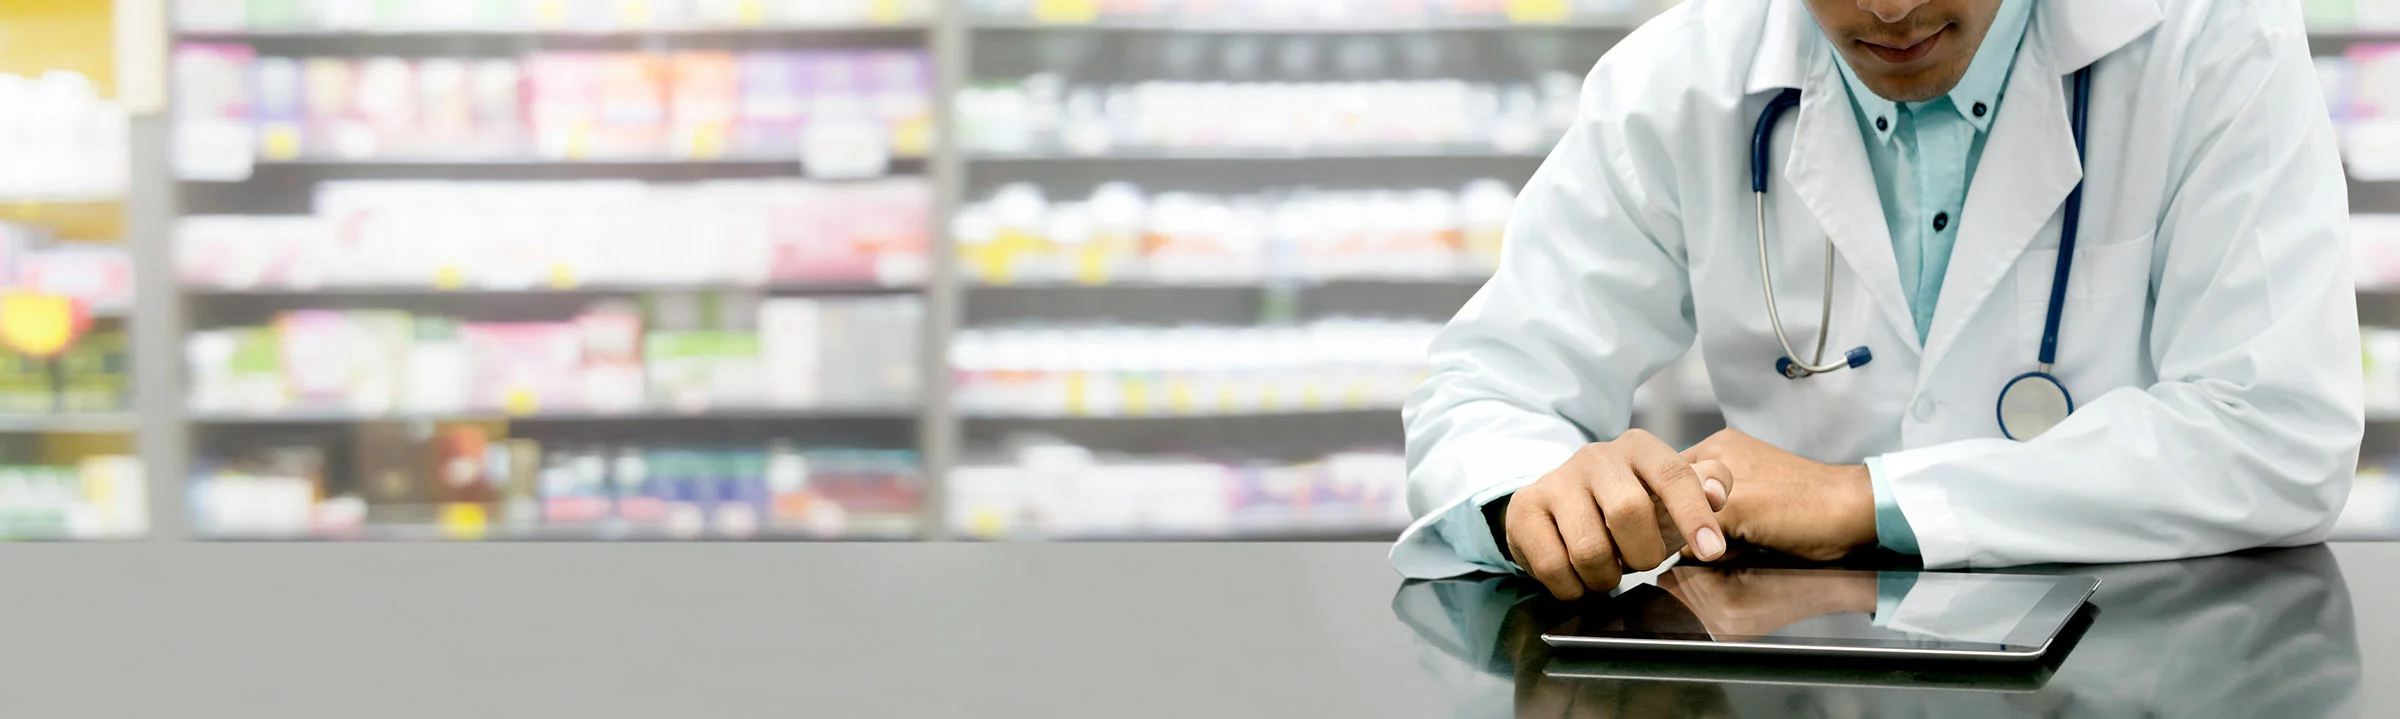 Pharmacist with iPad entering prescriptions